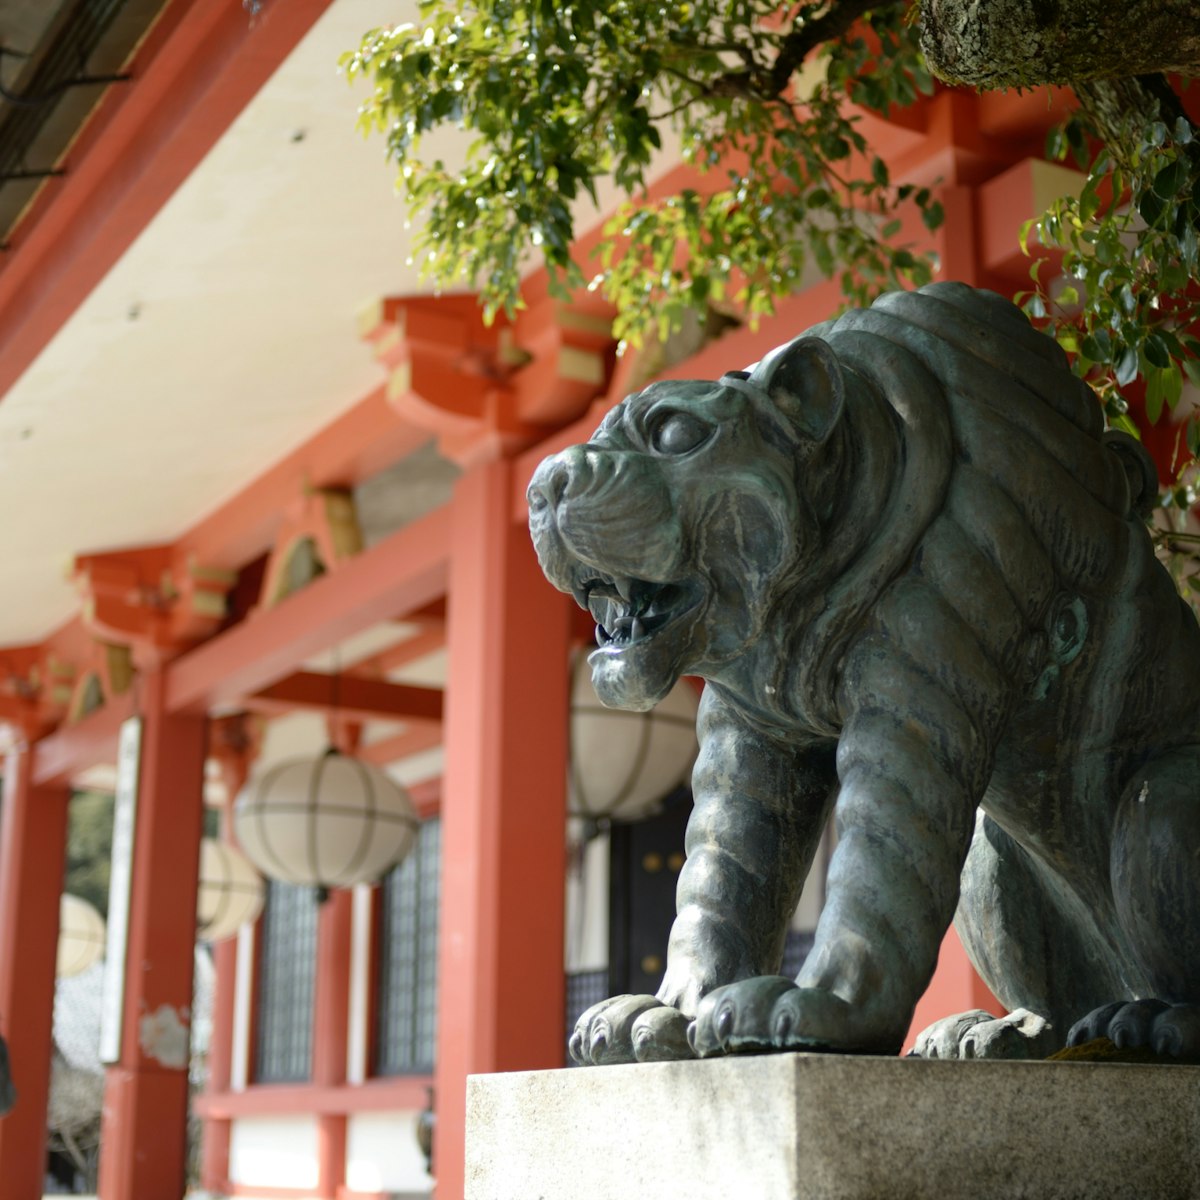 500px Photo ID: 104742241 - Photo taken at Kurama-dera, Sakyo ward, Kyoto, Kyoto, Japan.